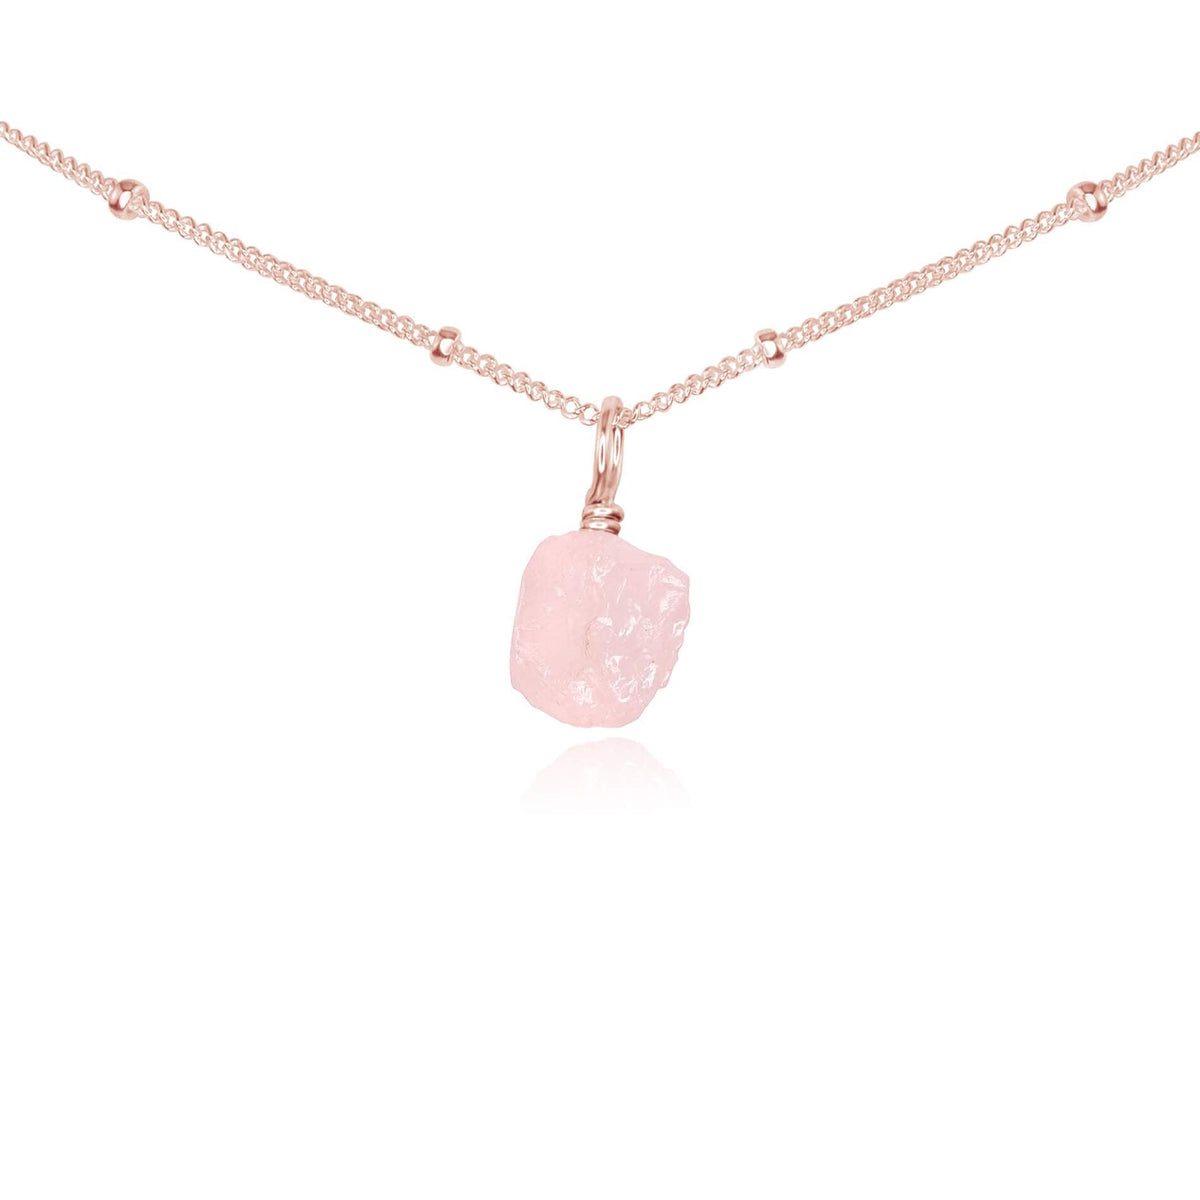 Tiny Rough Rose Quartz Gemstone Pendant Choker - Tiny Rough Rose Quartz Gemstone Pendant Choker - 14k Rose Gold Fill / Satellite - Luna Tide Handmade Crystal Jewellery